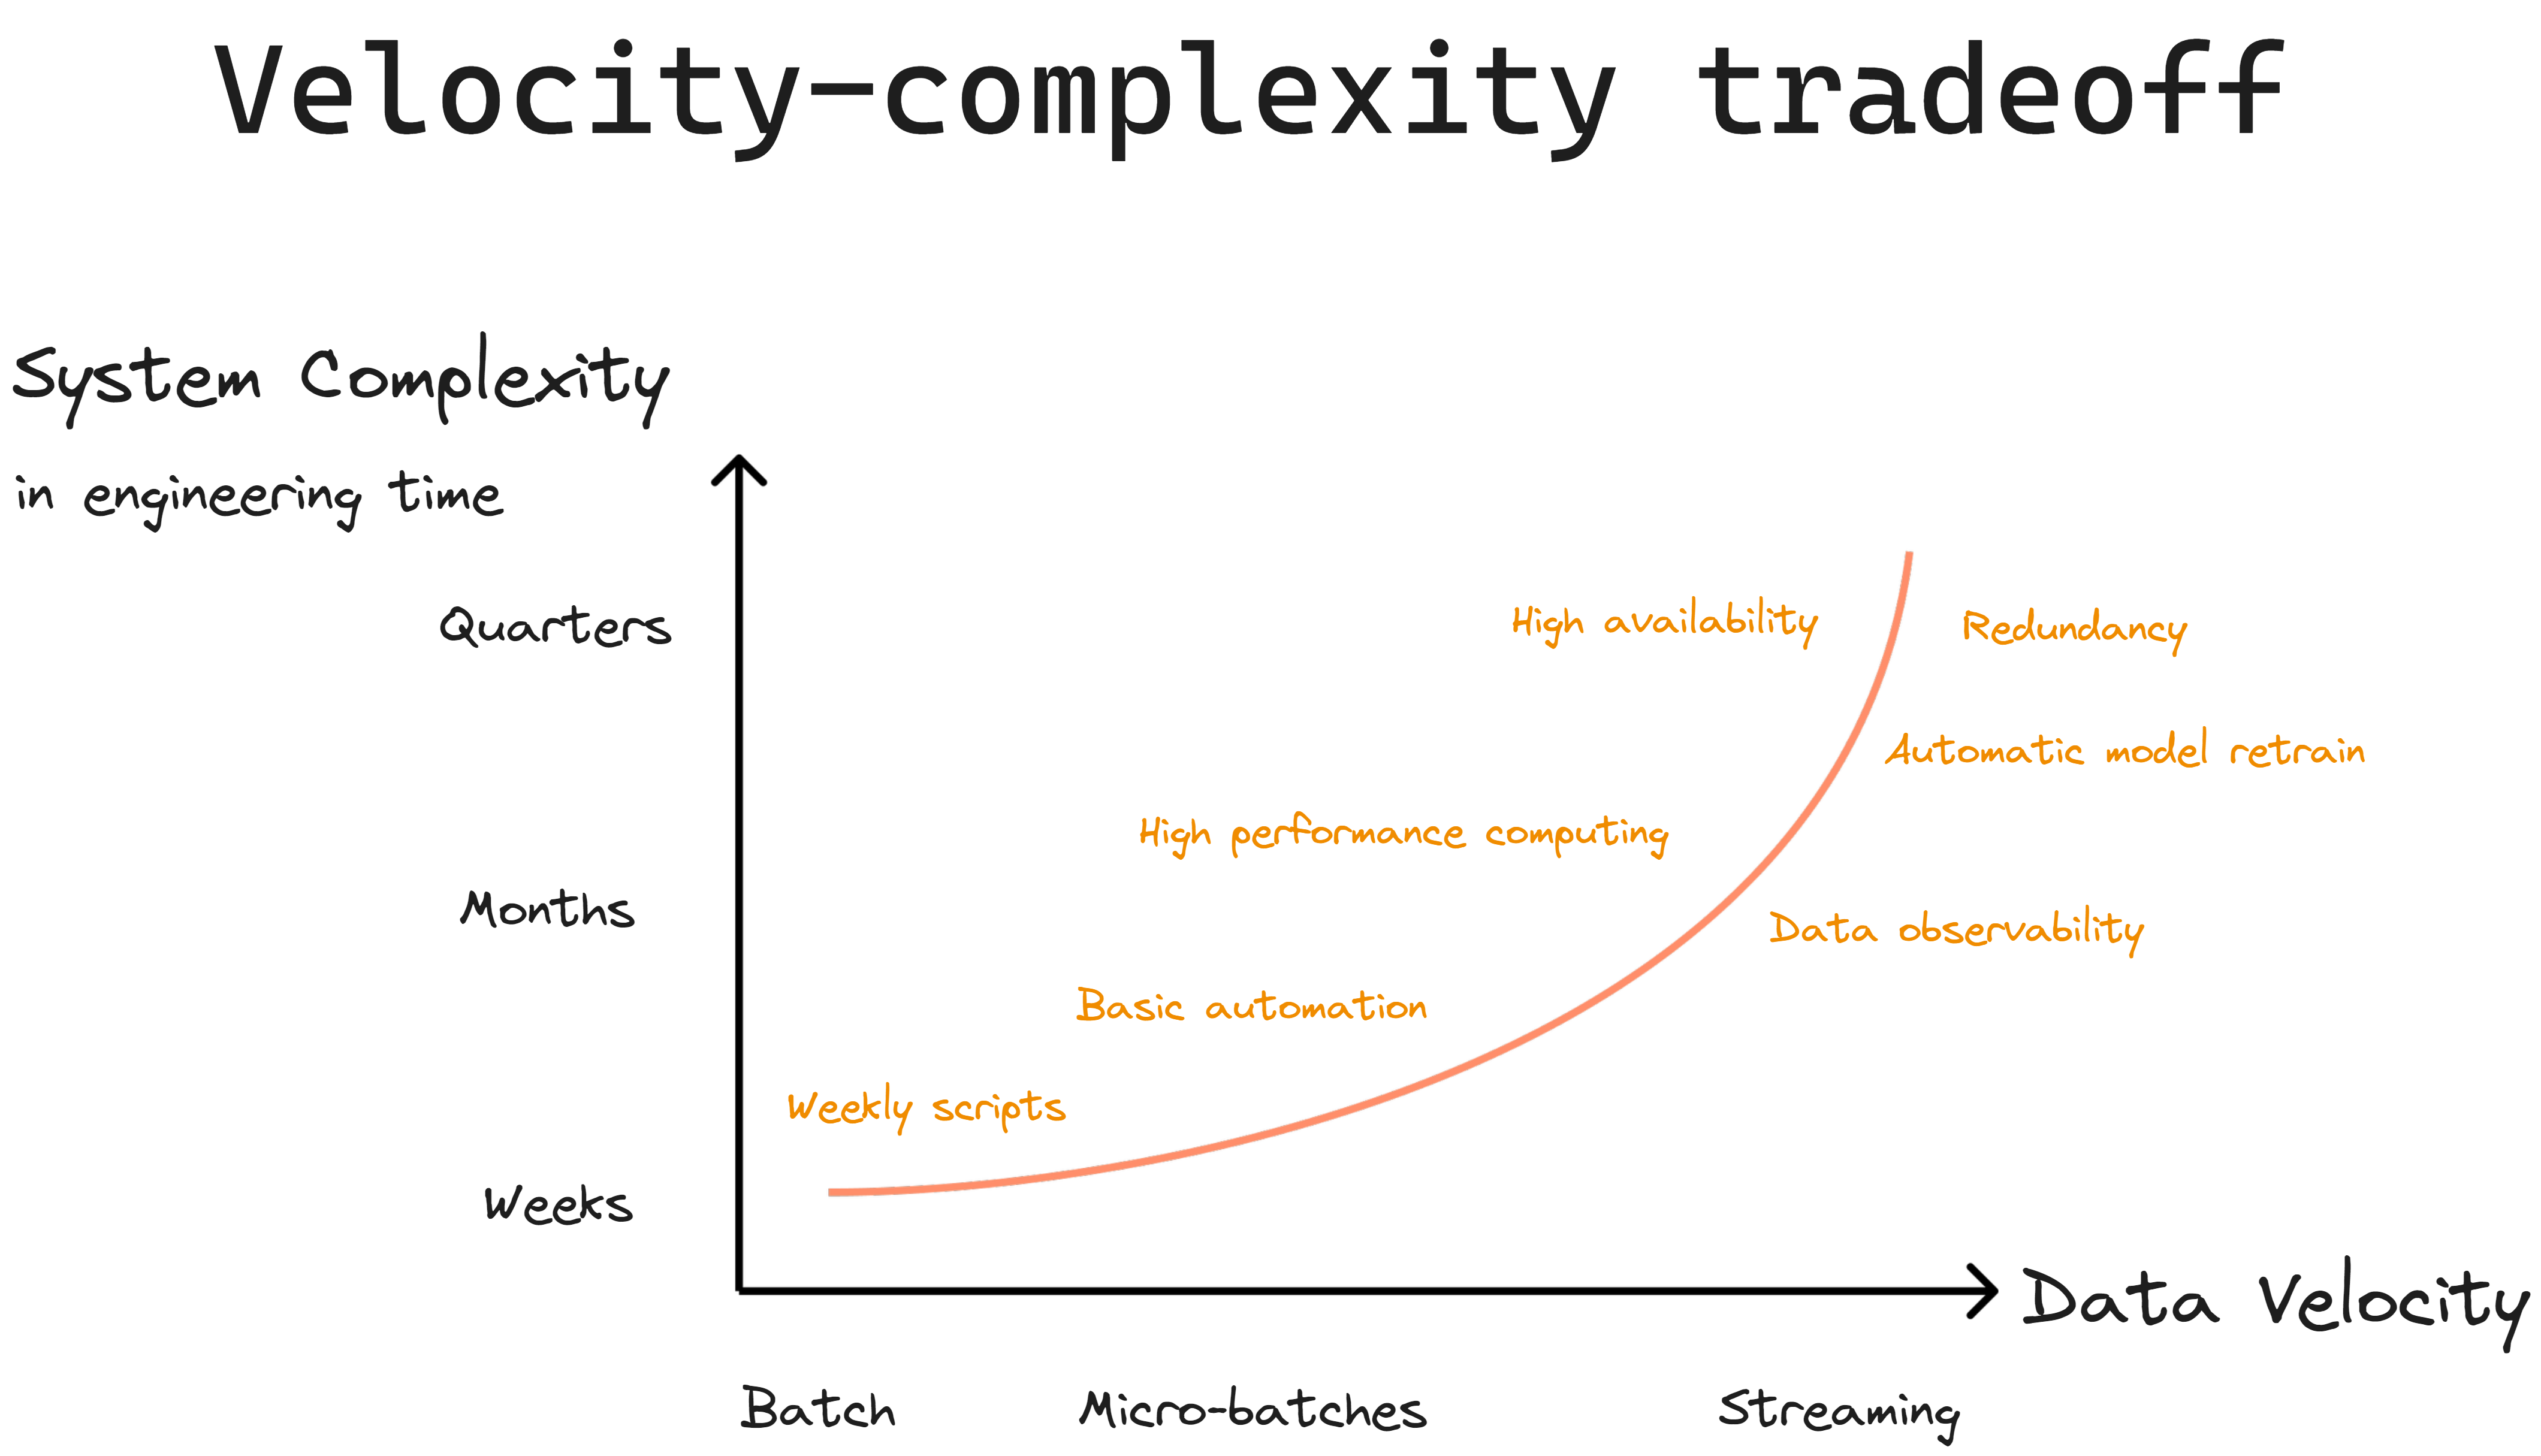 Velocity-complexity tradeoff